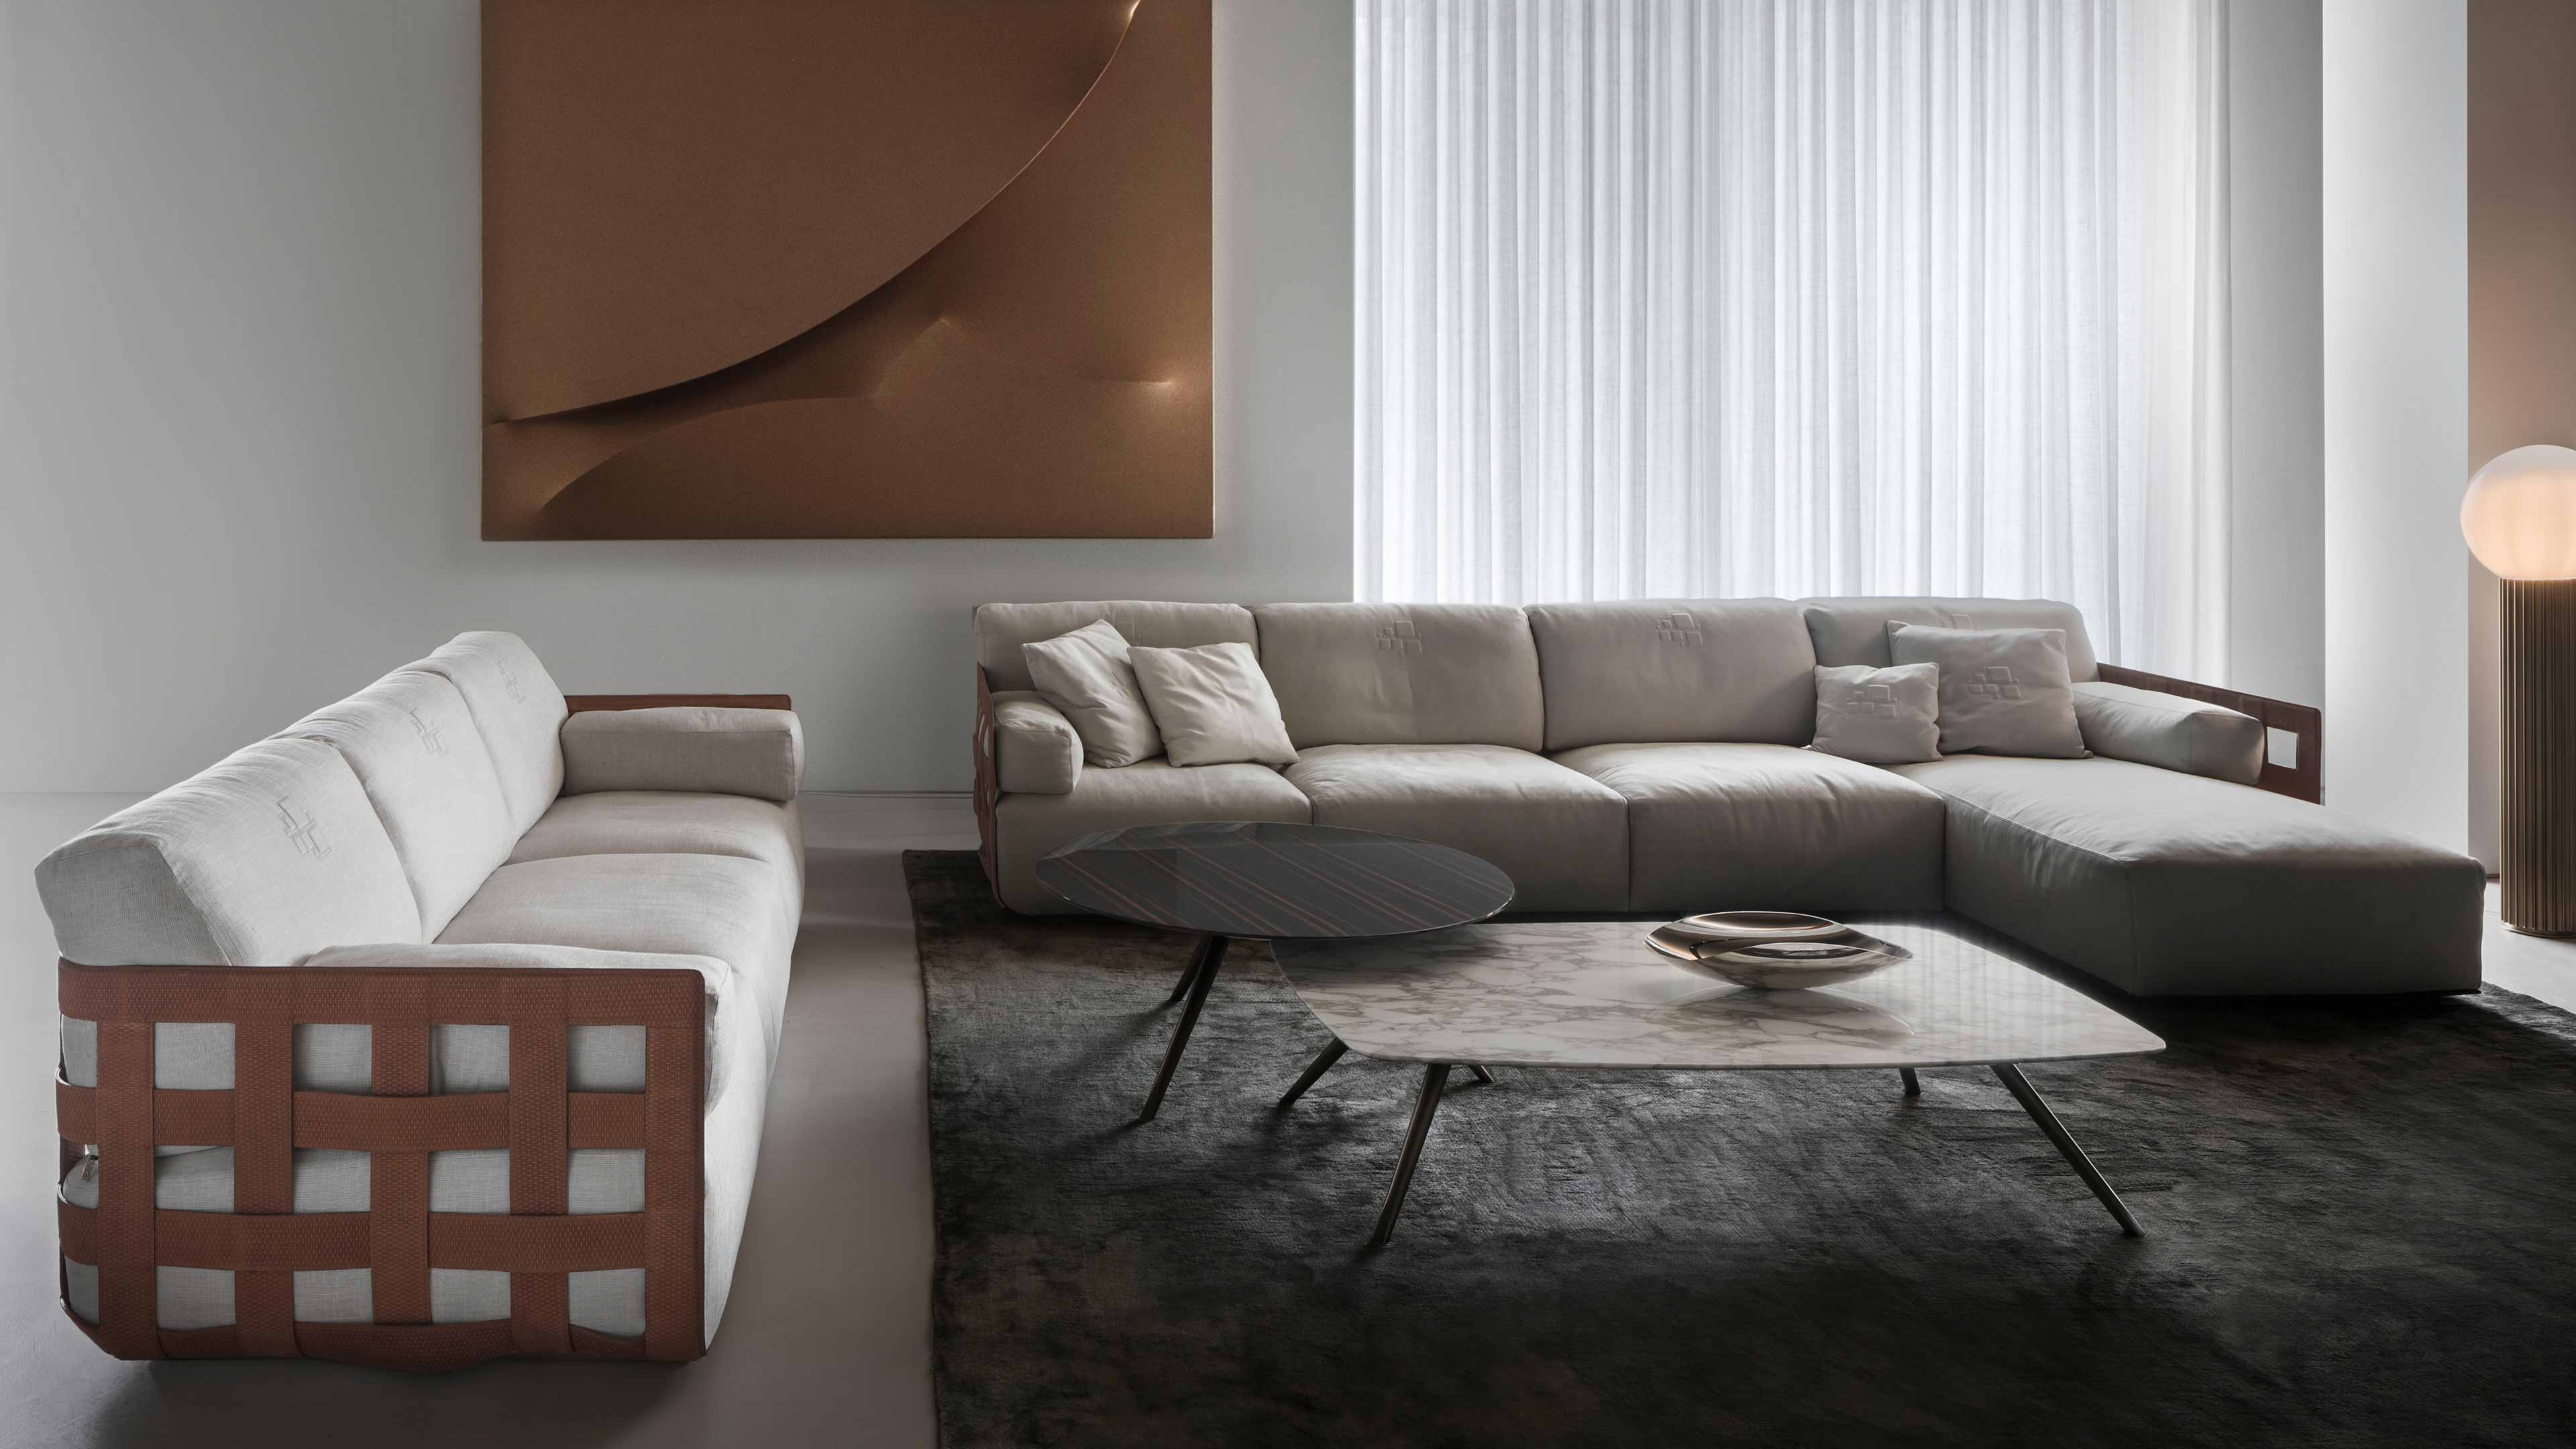 rugiano沙发:舒适实用,给客厅环境增添一份现代感